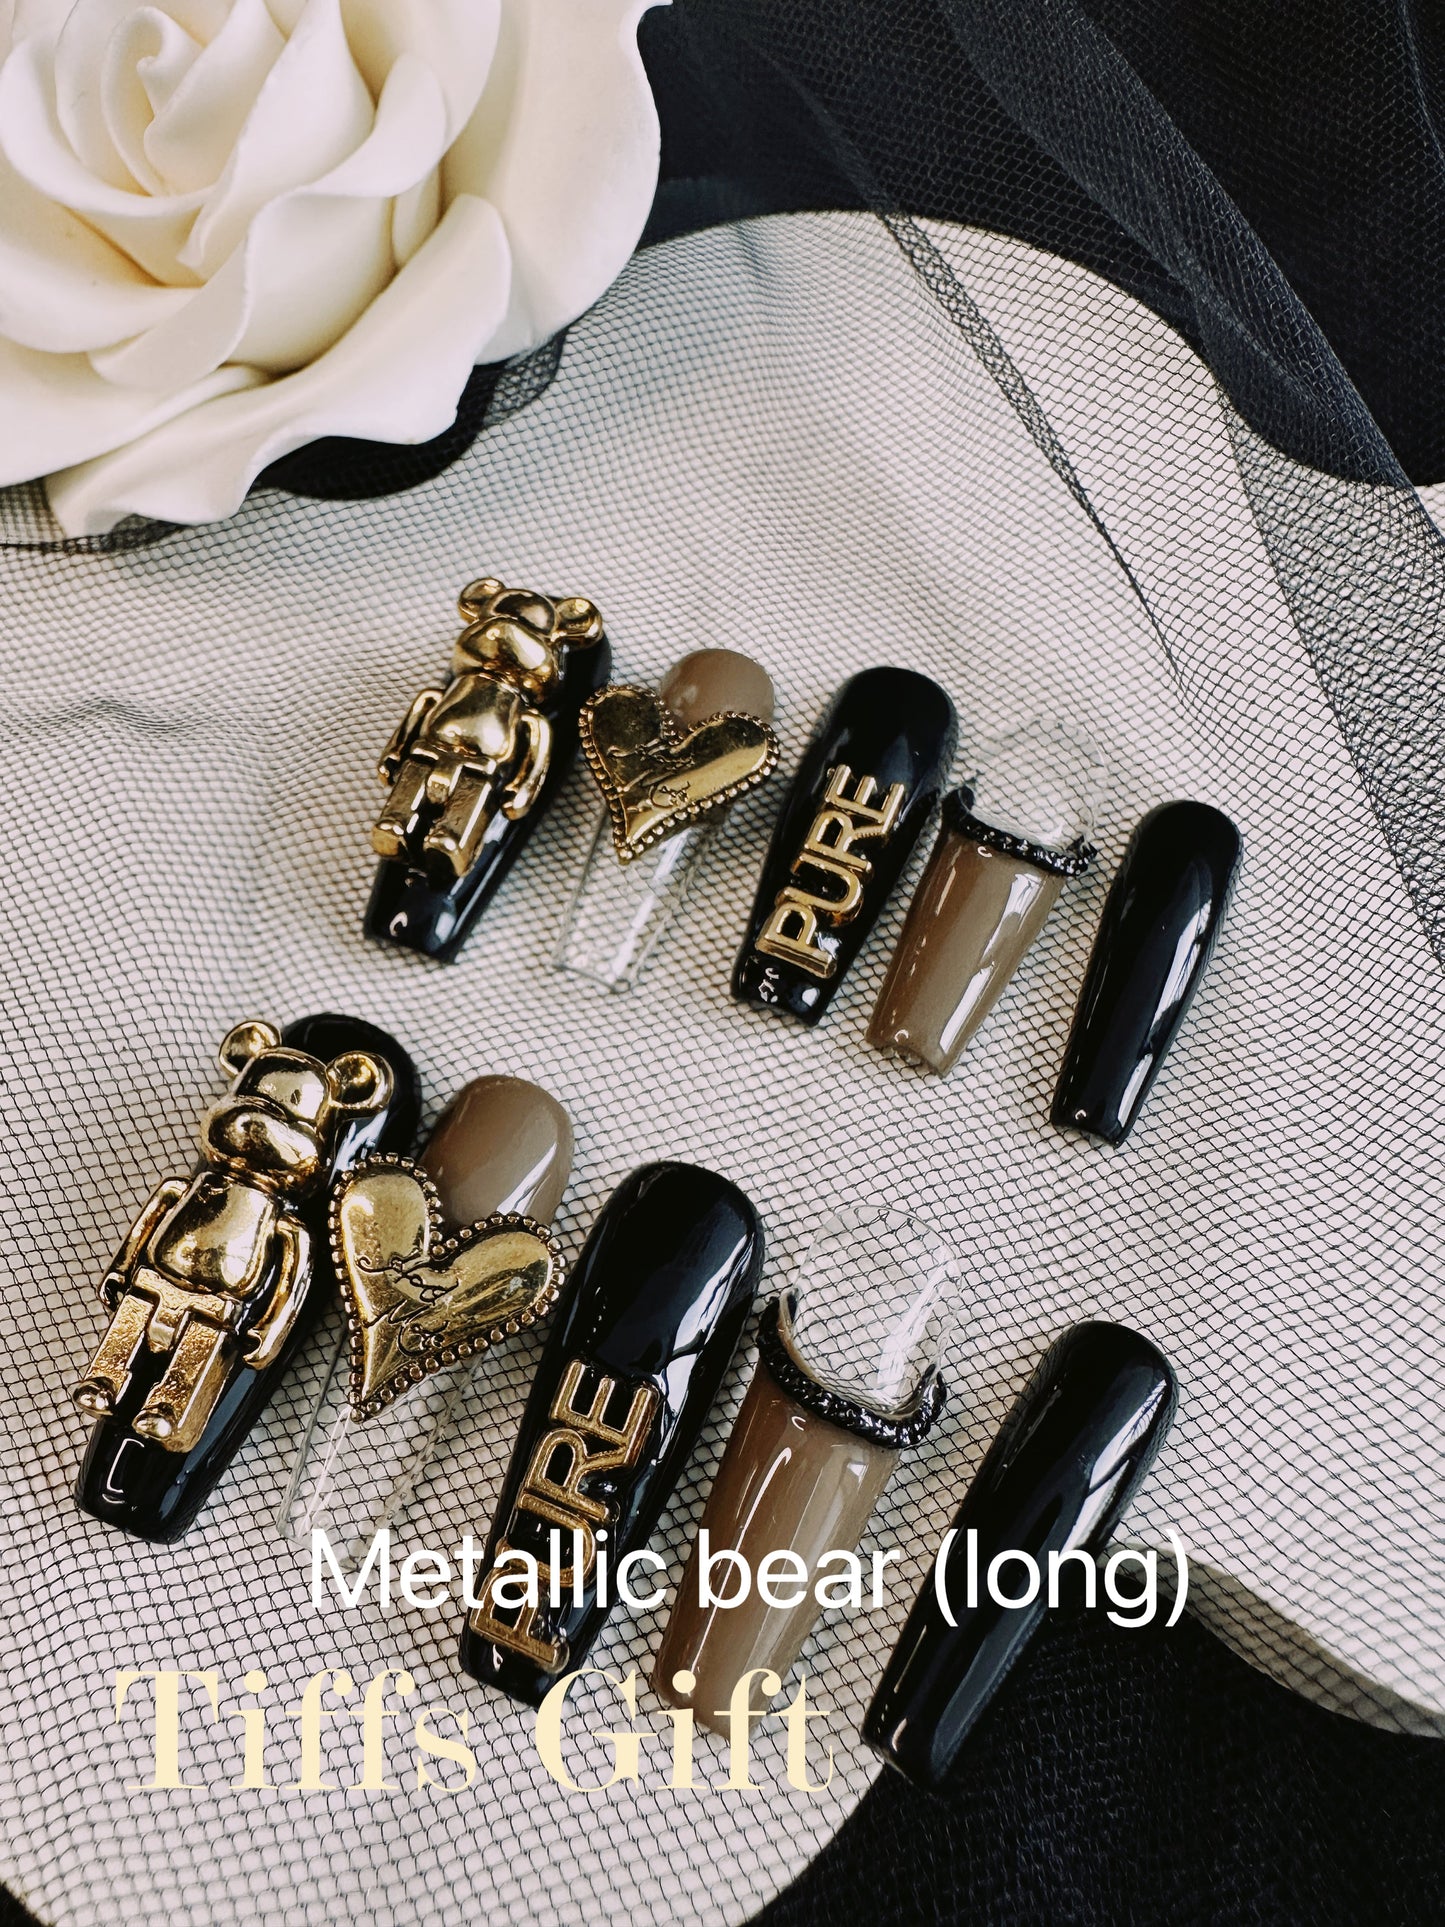 Metallic bear(long) Reusable HandMade Press On Nails - TiffsGift